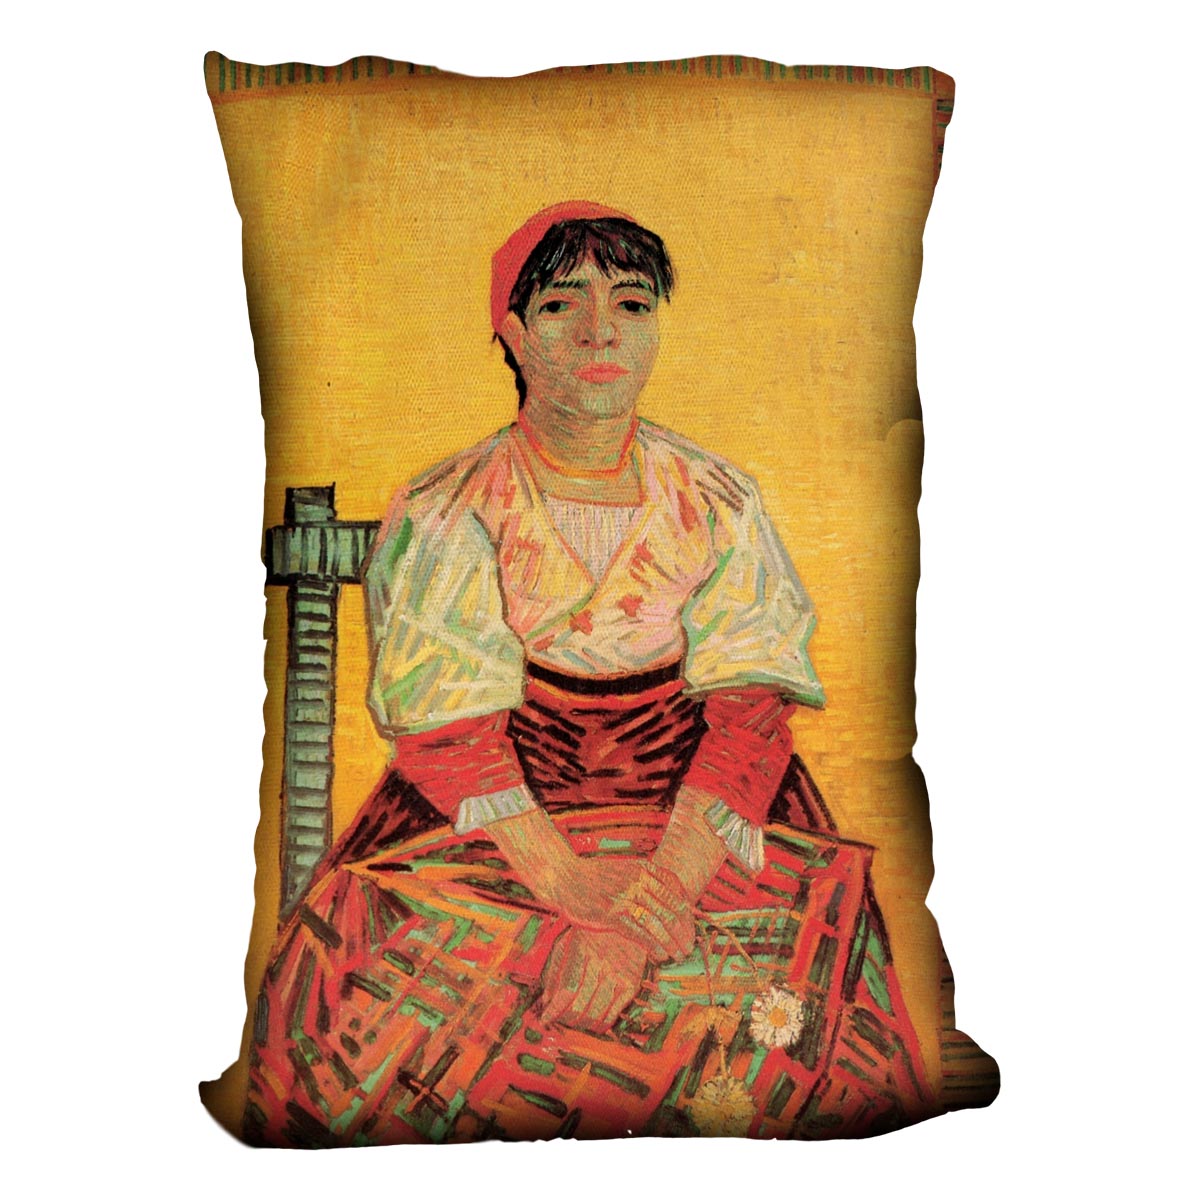 Italian Woman Agostina Segatori by Van Gogh Cushion